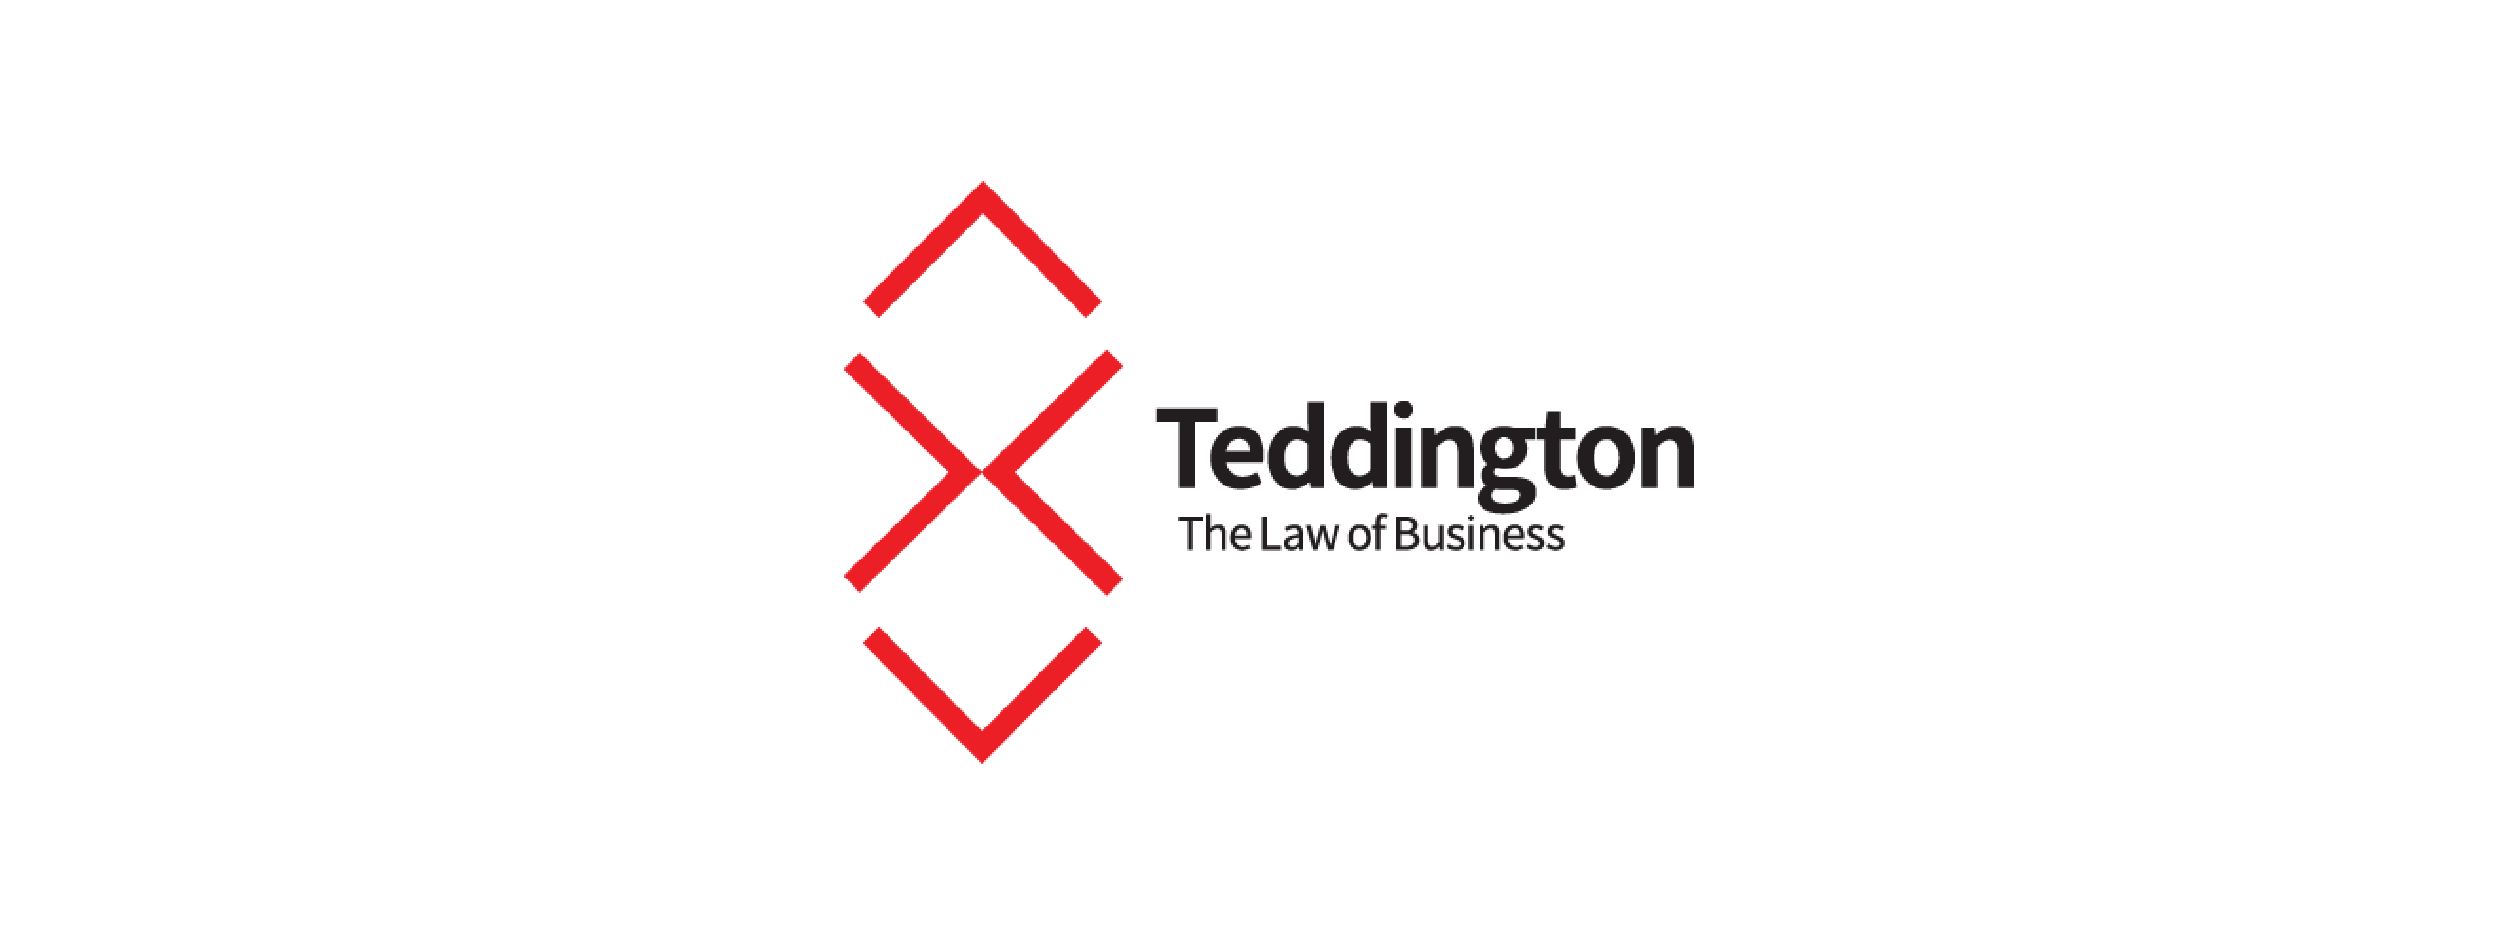 Teddington Brand Logo Mark